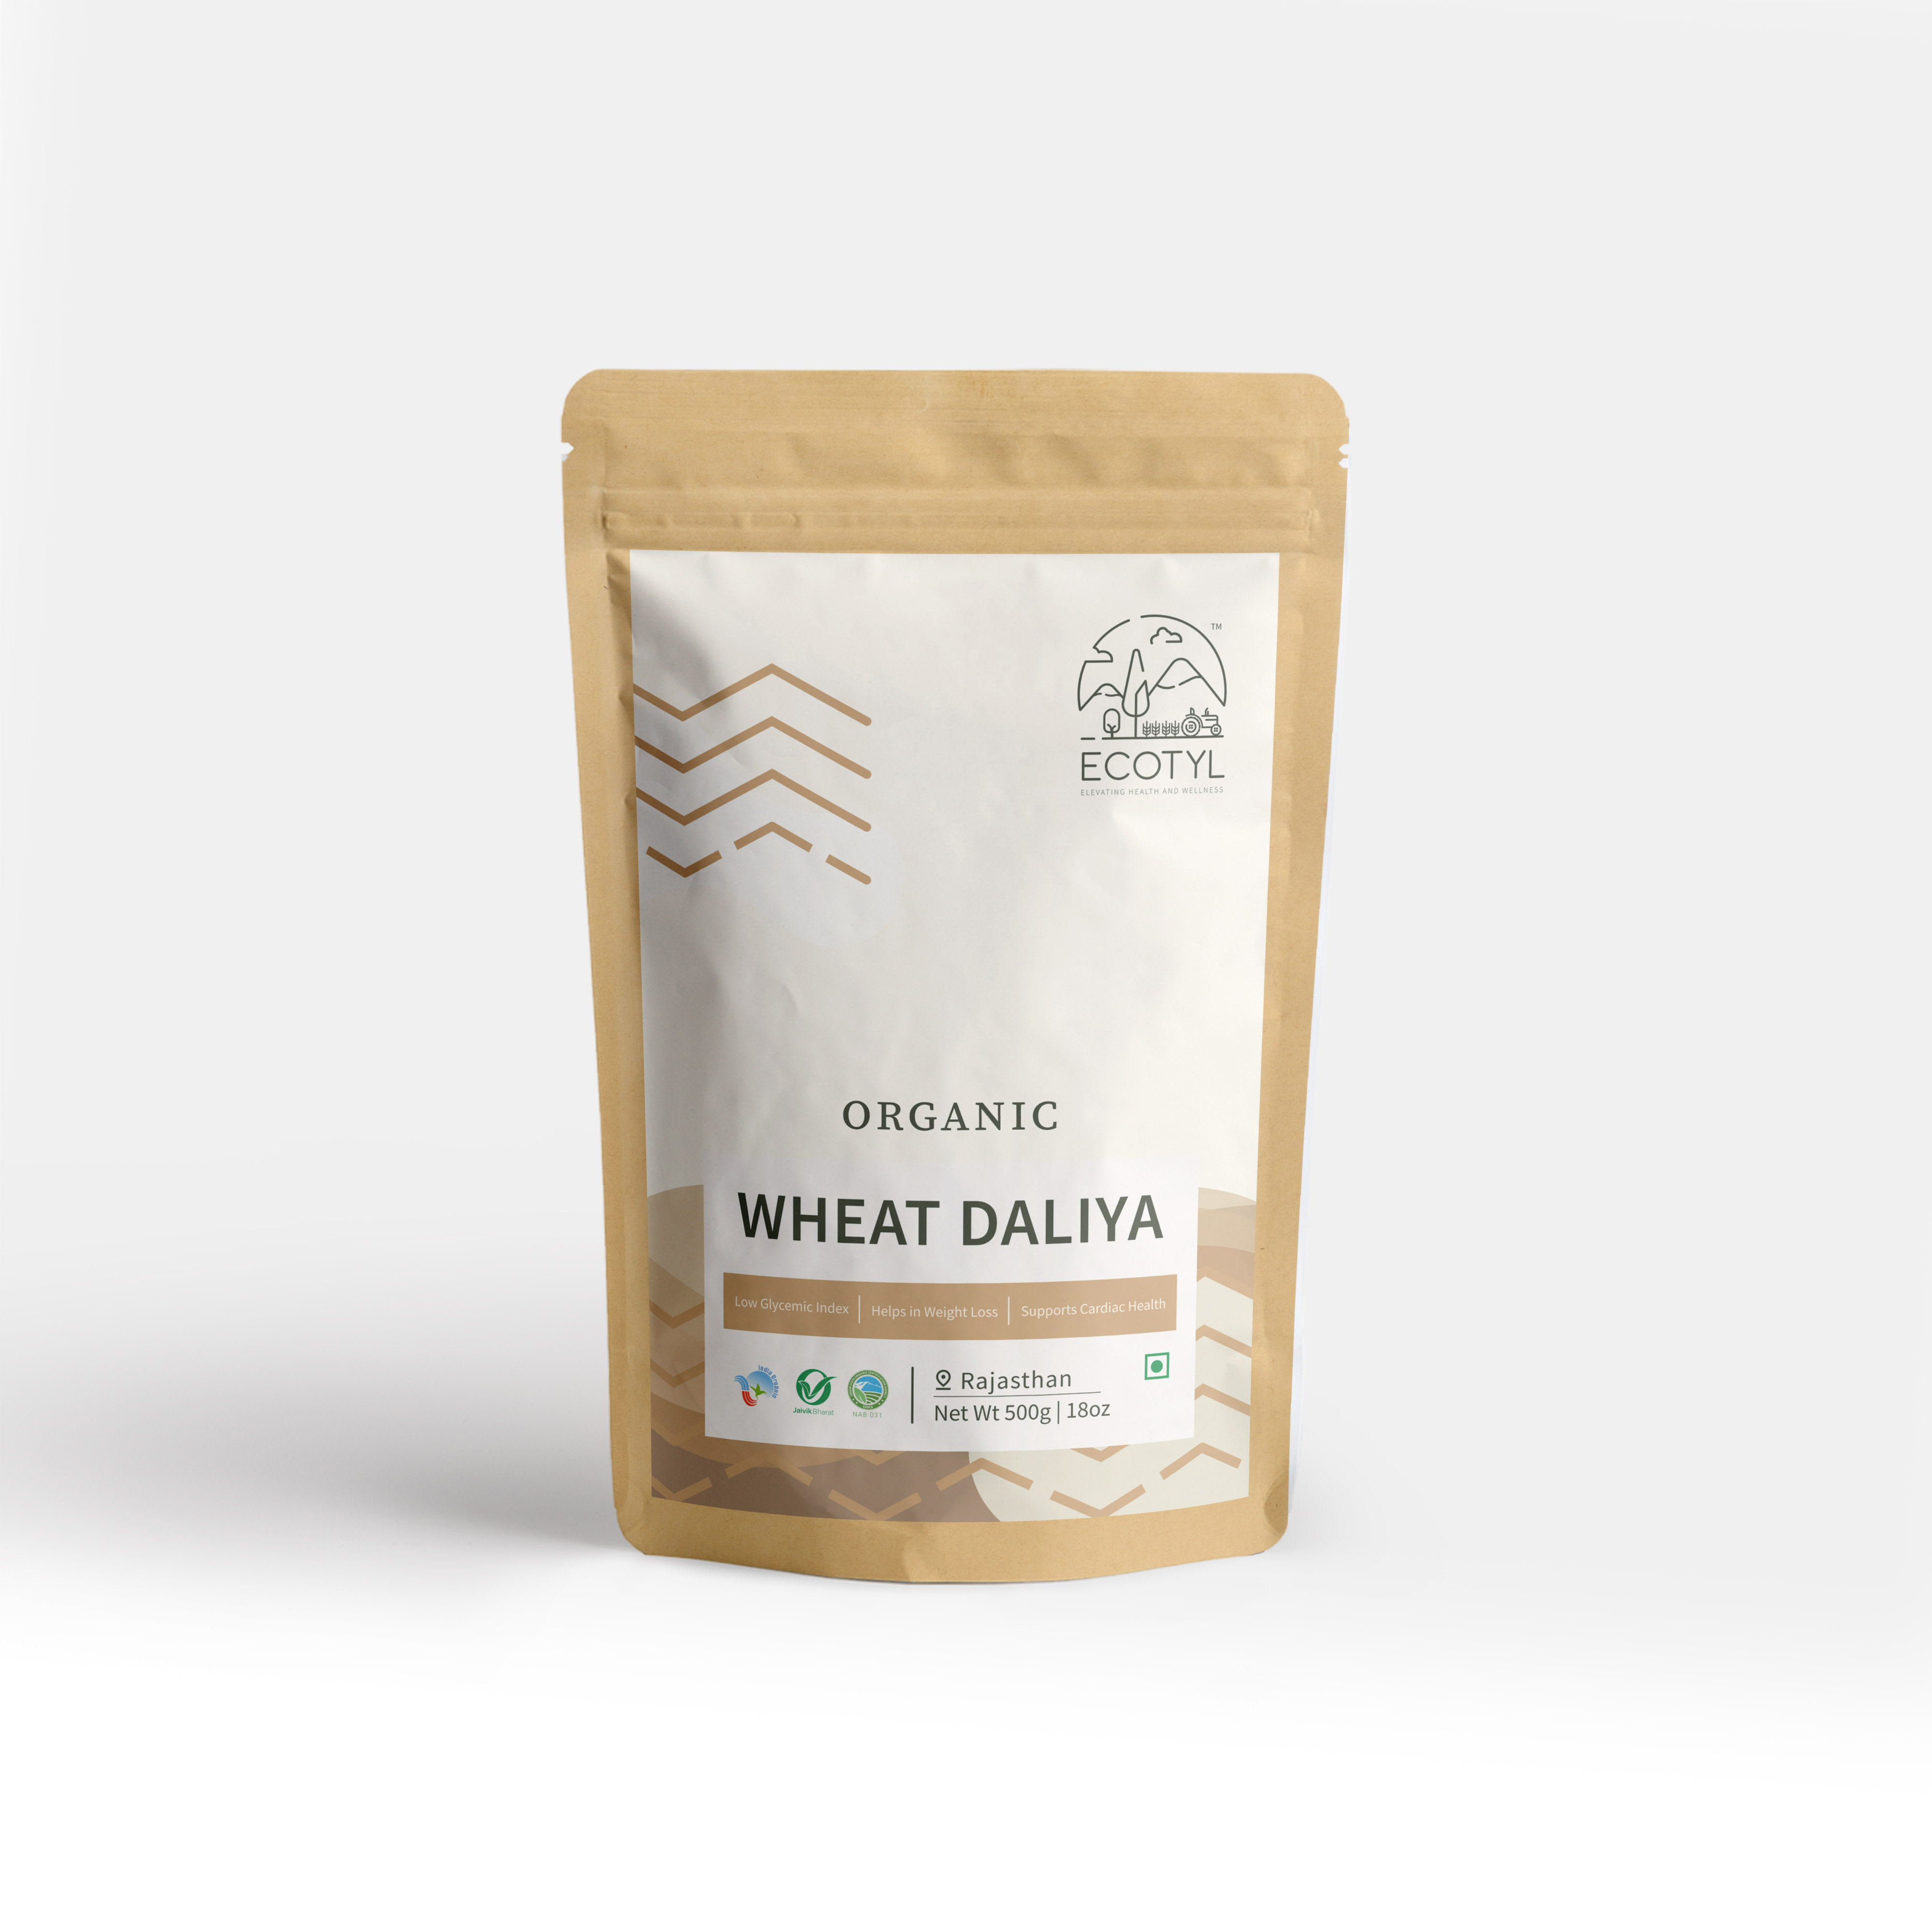 Buy Ecotyl Organic Wheat Daliya - 500 g at Best Price Online